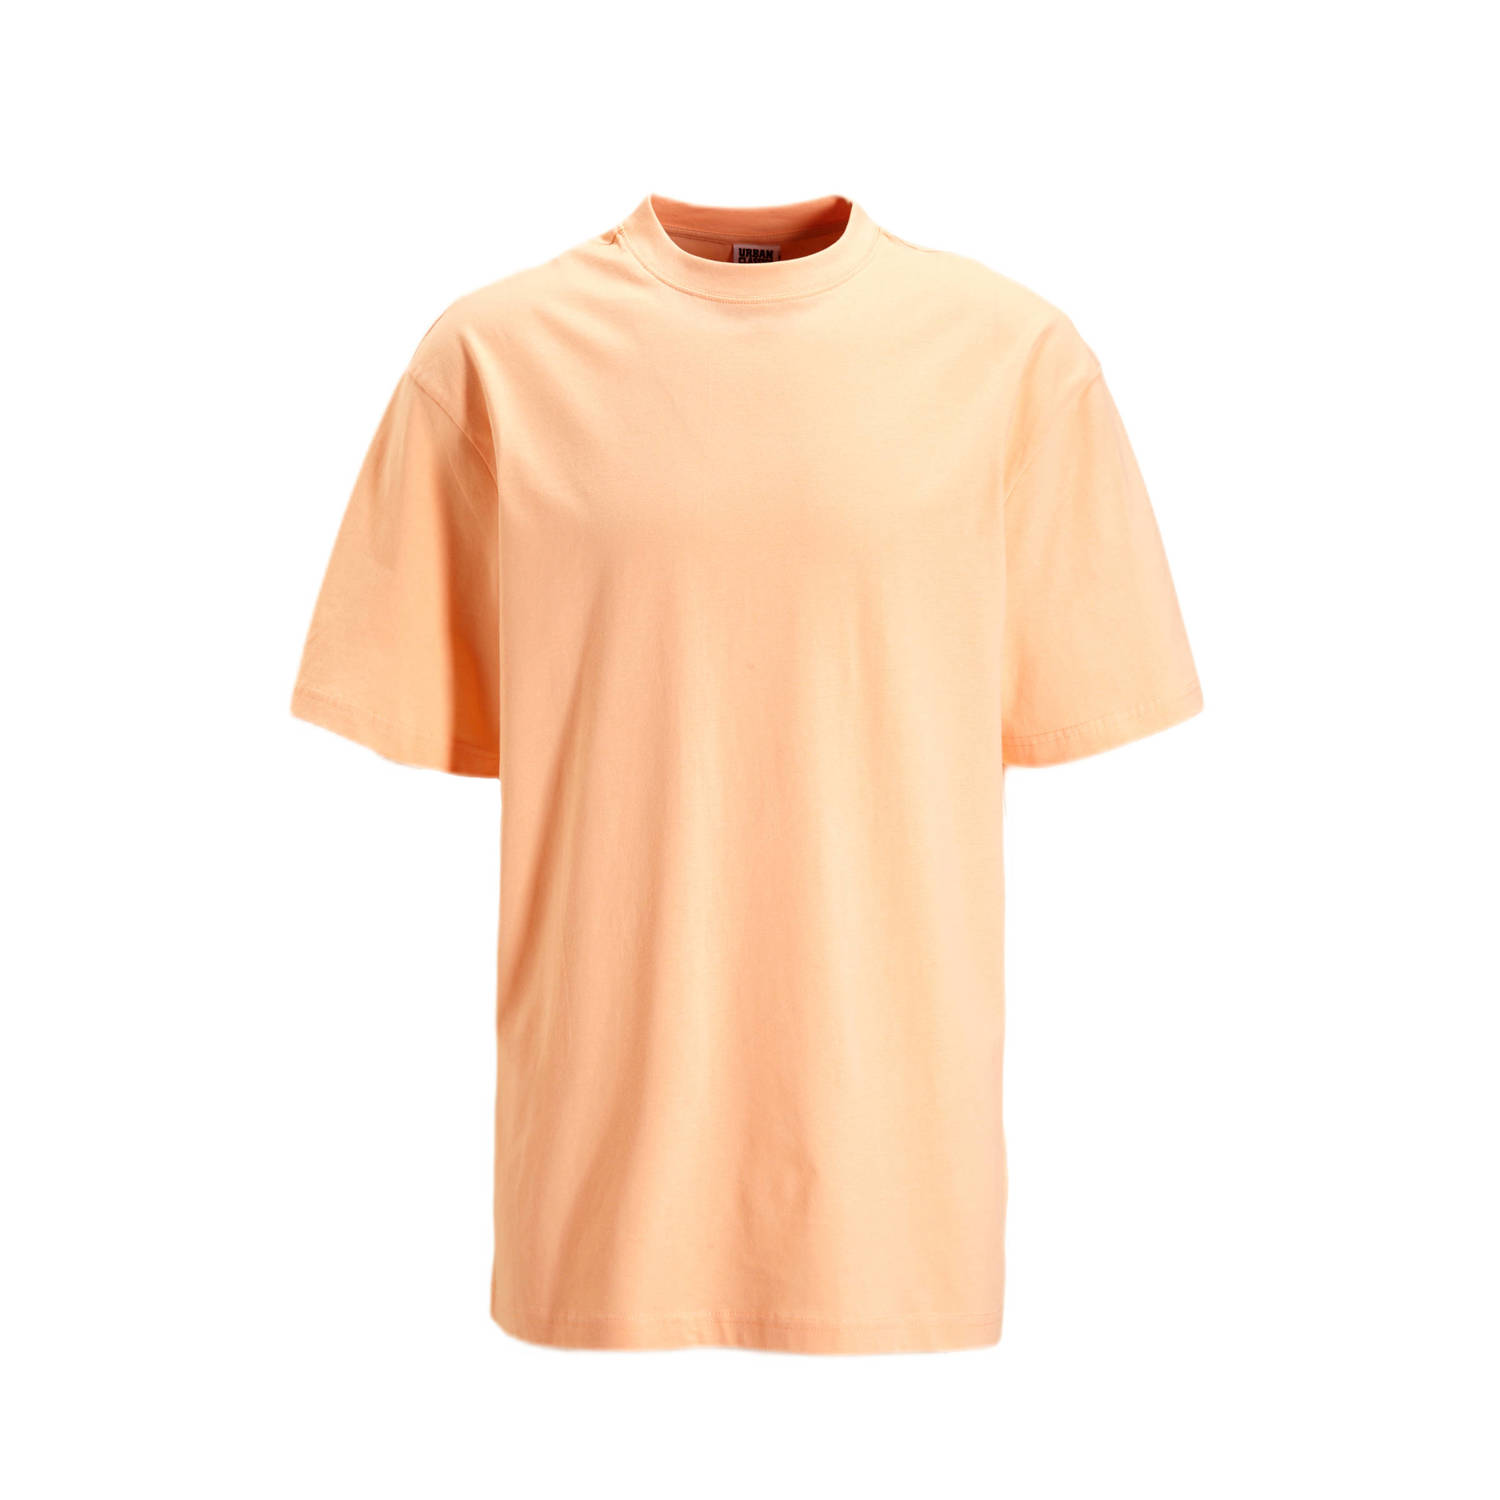 Urban Classics oversized T-shirt apricot